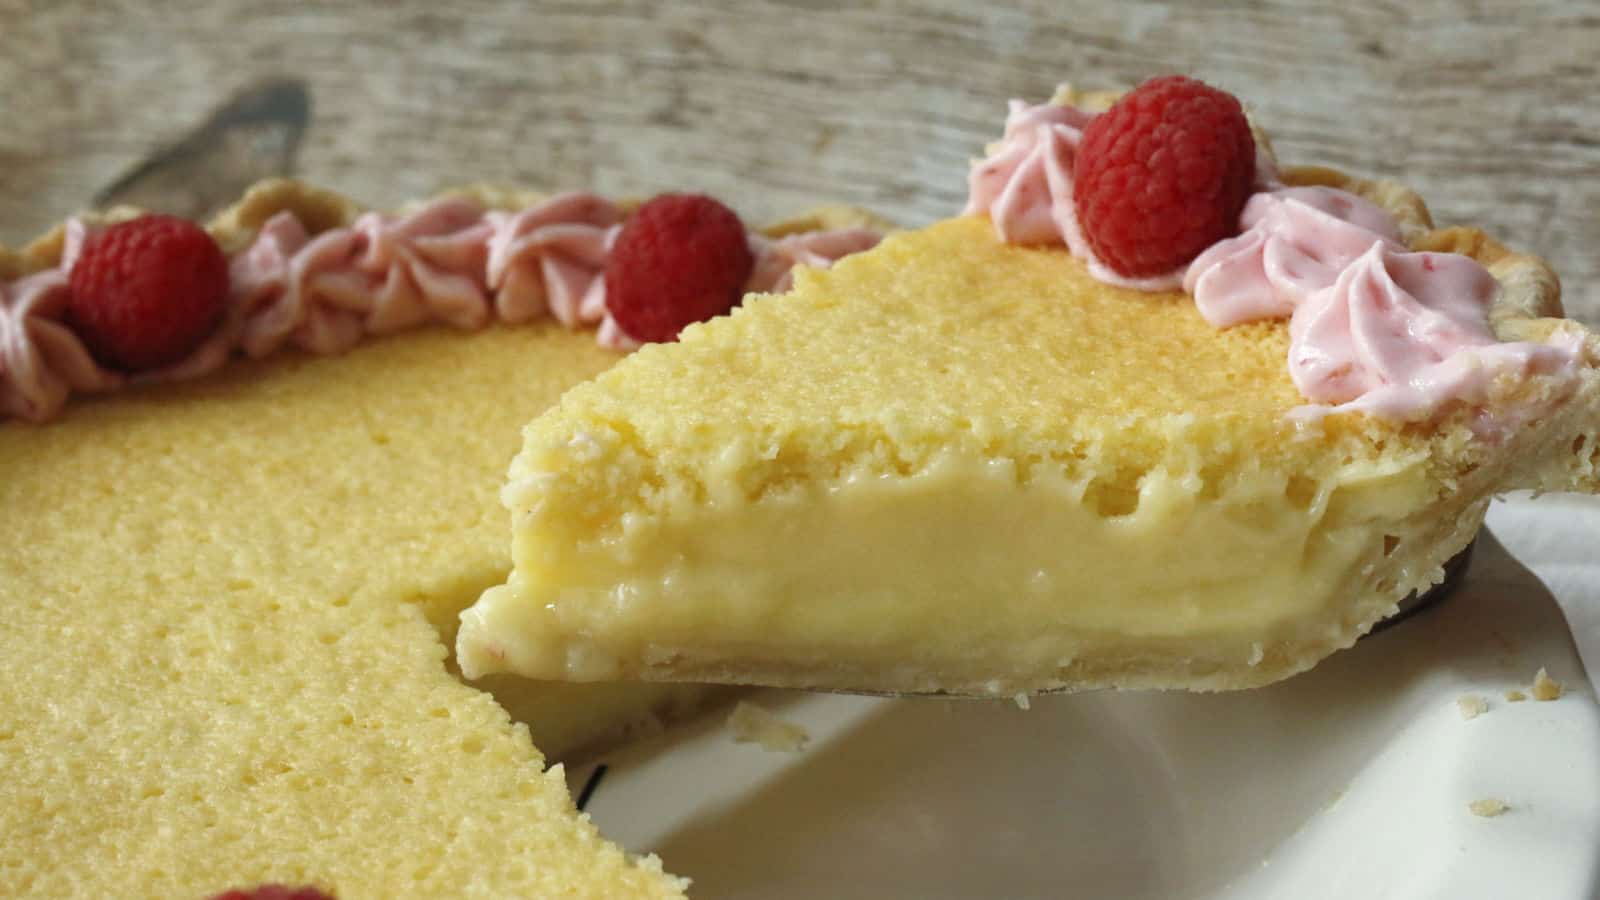 A slice of lemon pie with raspberries on top.